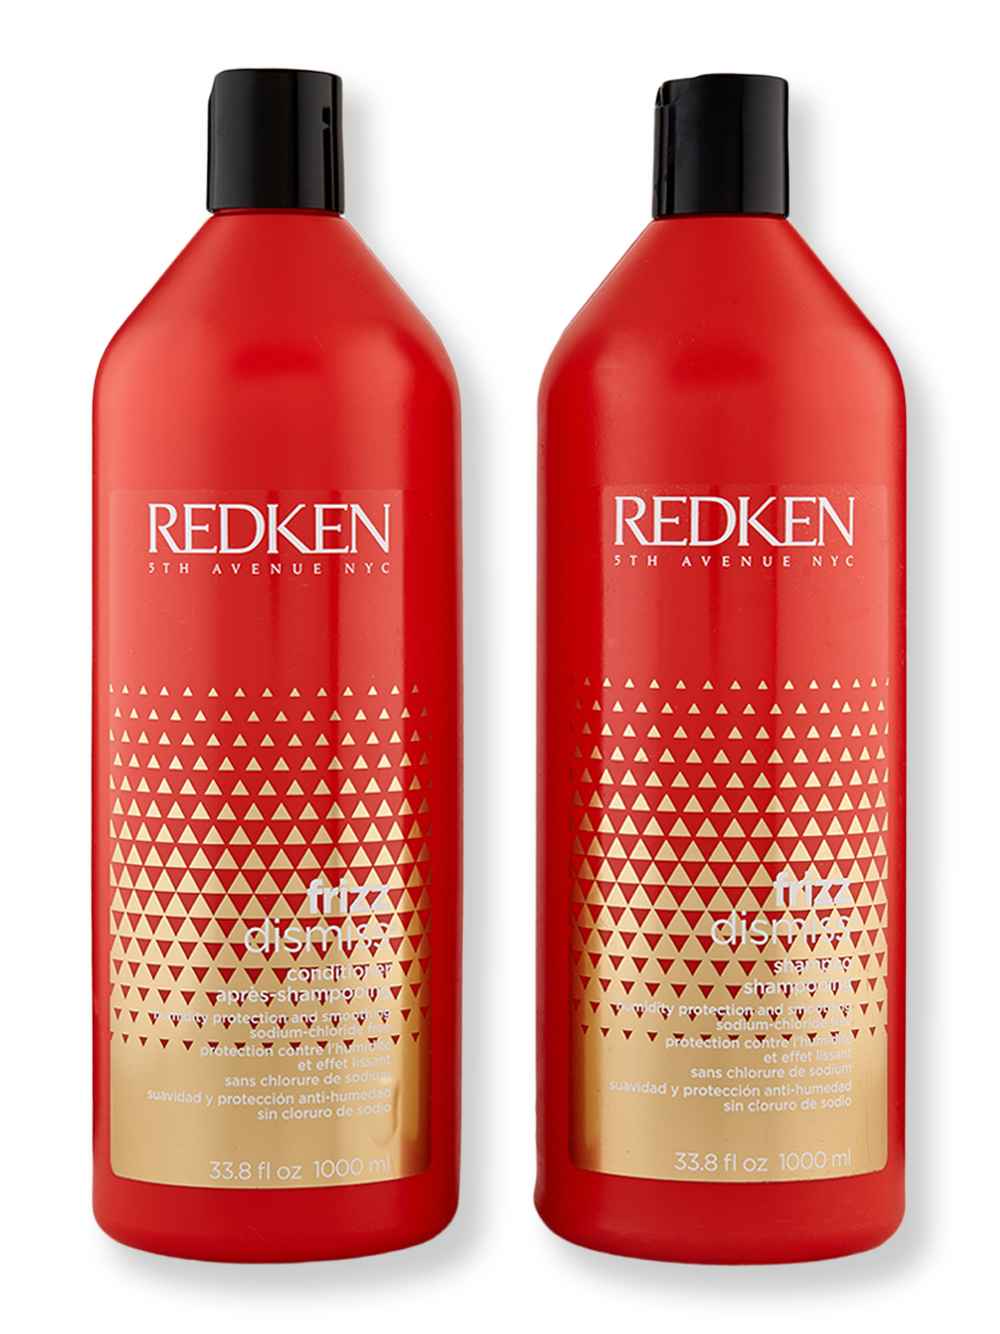 Redken Redken Frizz Dismiss Shampoo & Conditioner 33.8 oz Hair Care Value Sets 